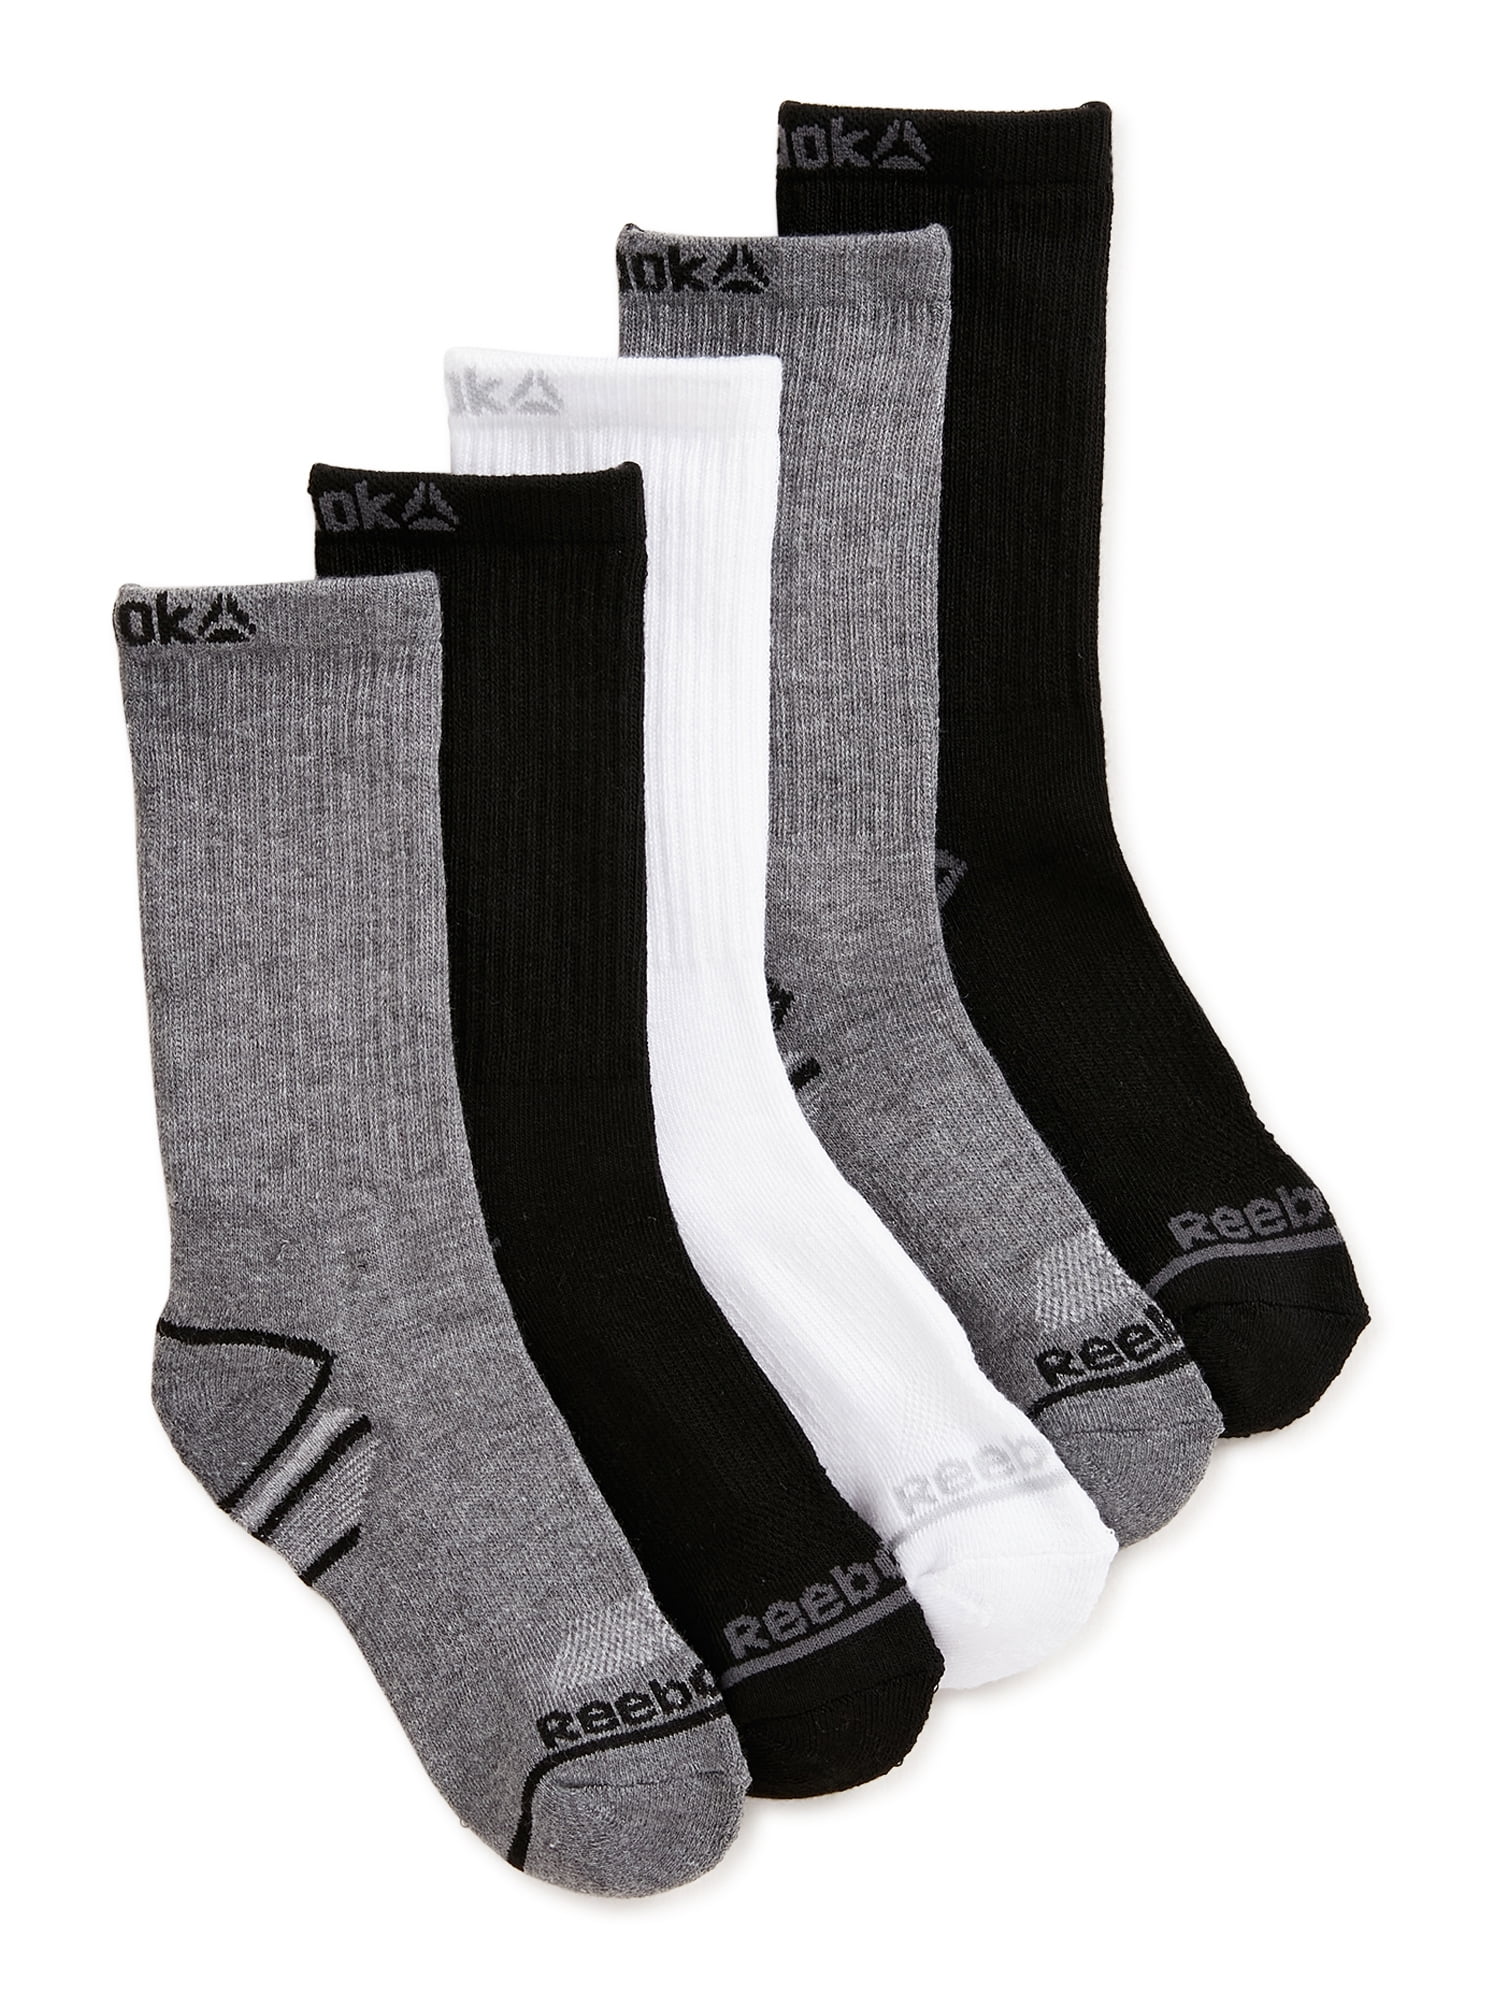 Reebok Performance Training Socks 5 Pack Black 10-13